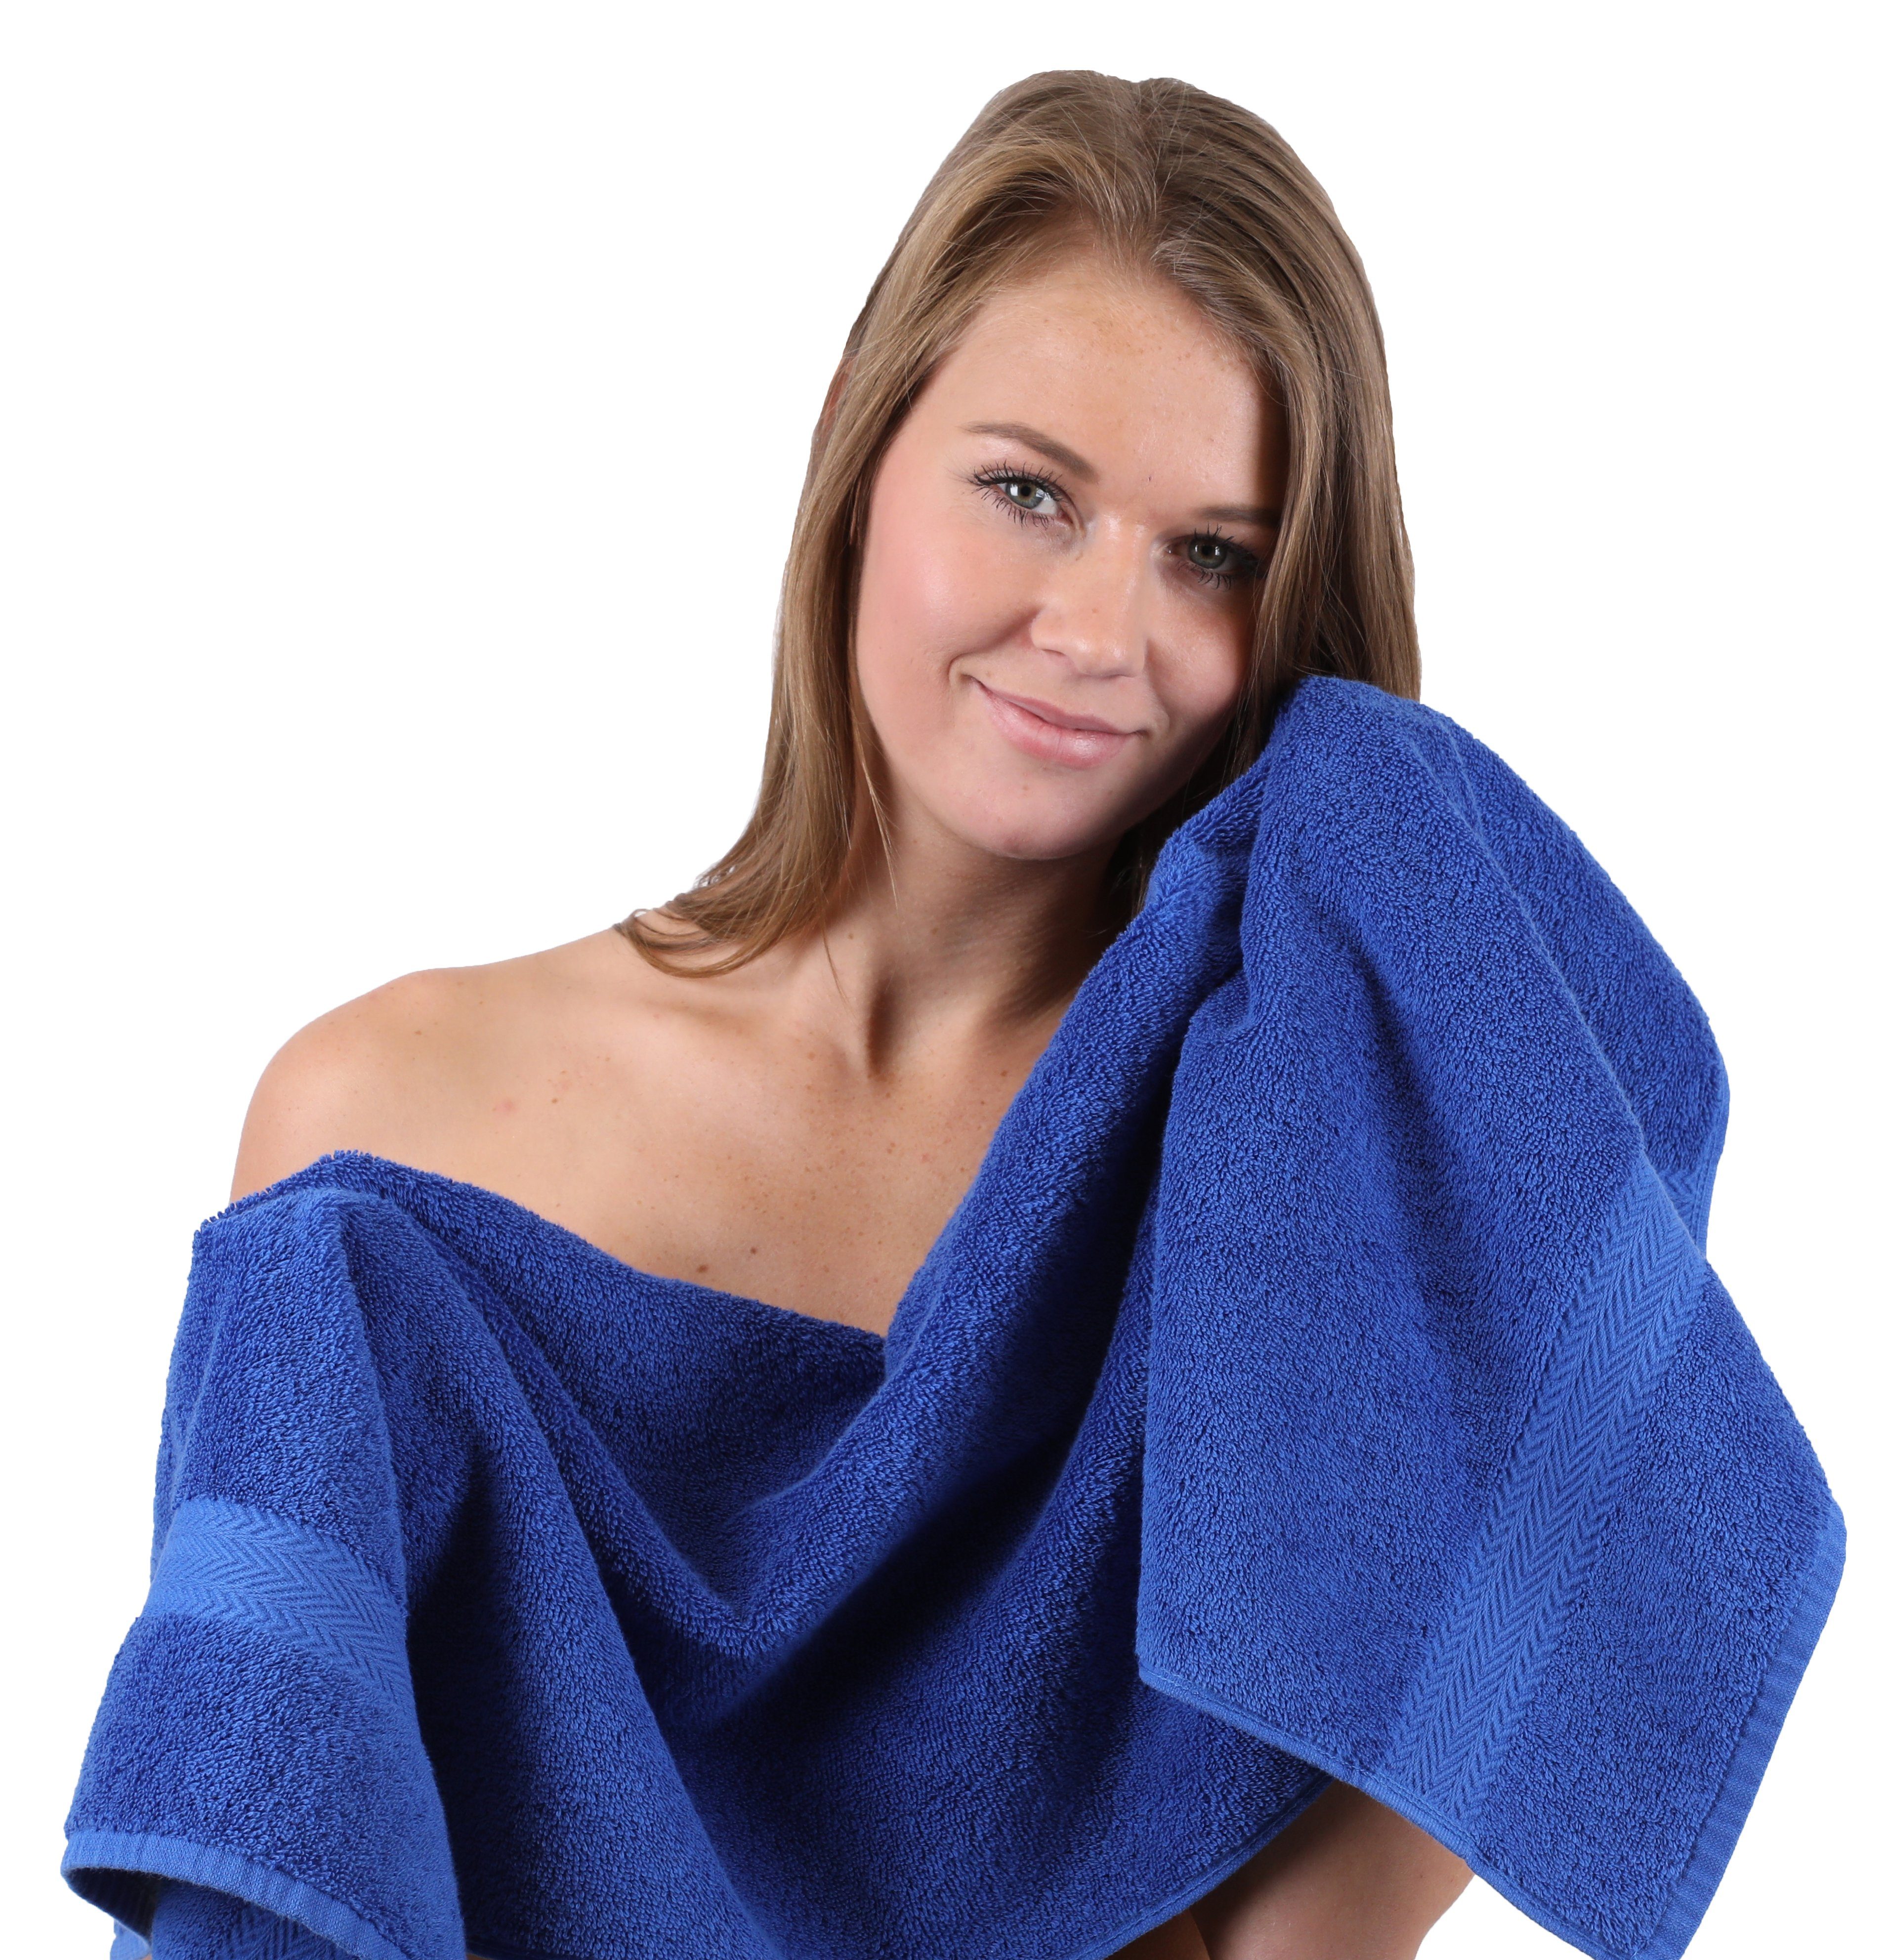 Betz Handtuch Set 10-TLG. Handtuch-Set Hellblau, Royalblau 100% Baumwolle, & Farbe (10-tlg) Premium